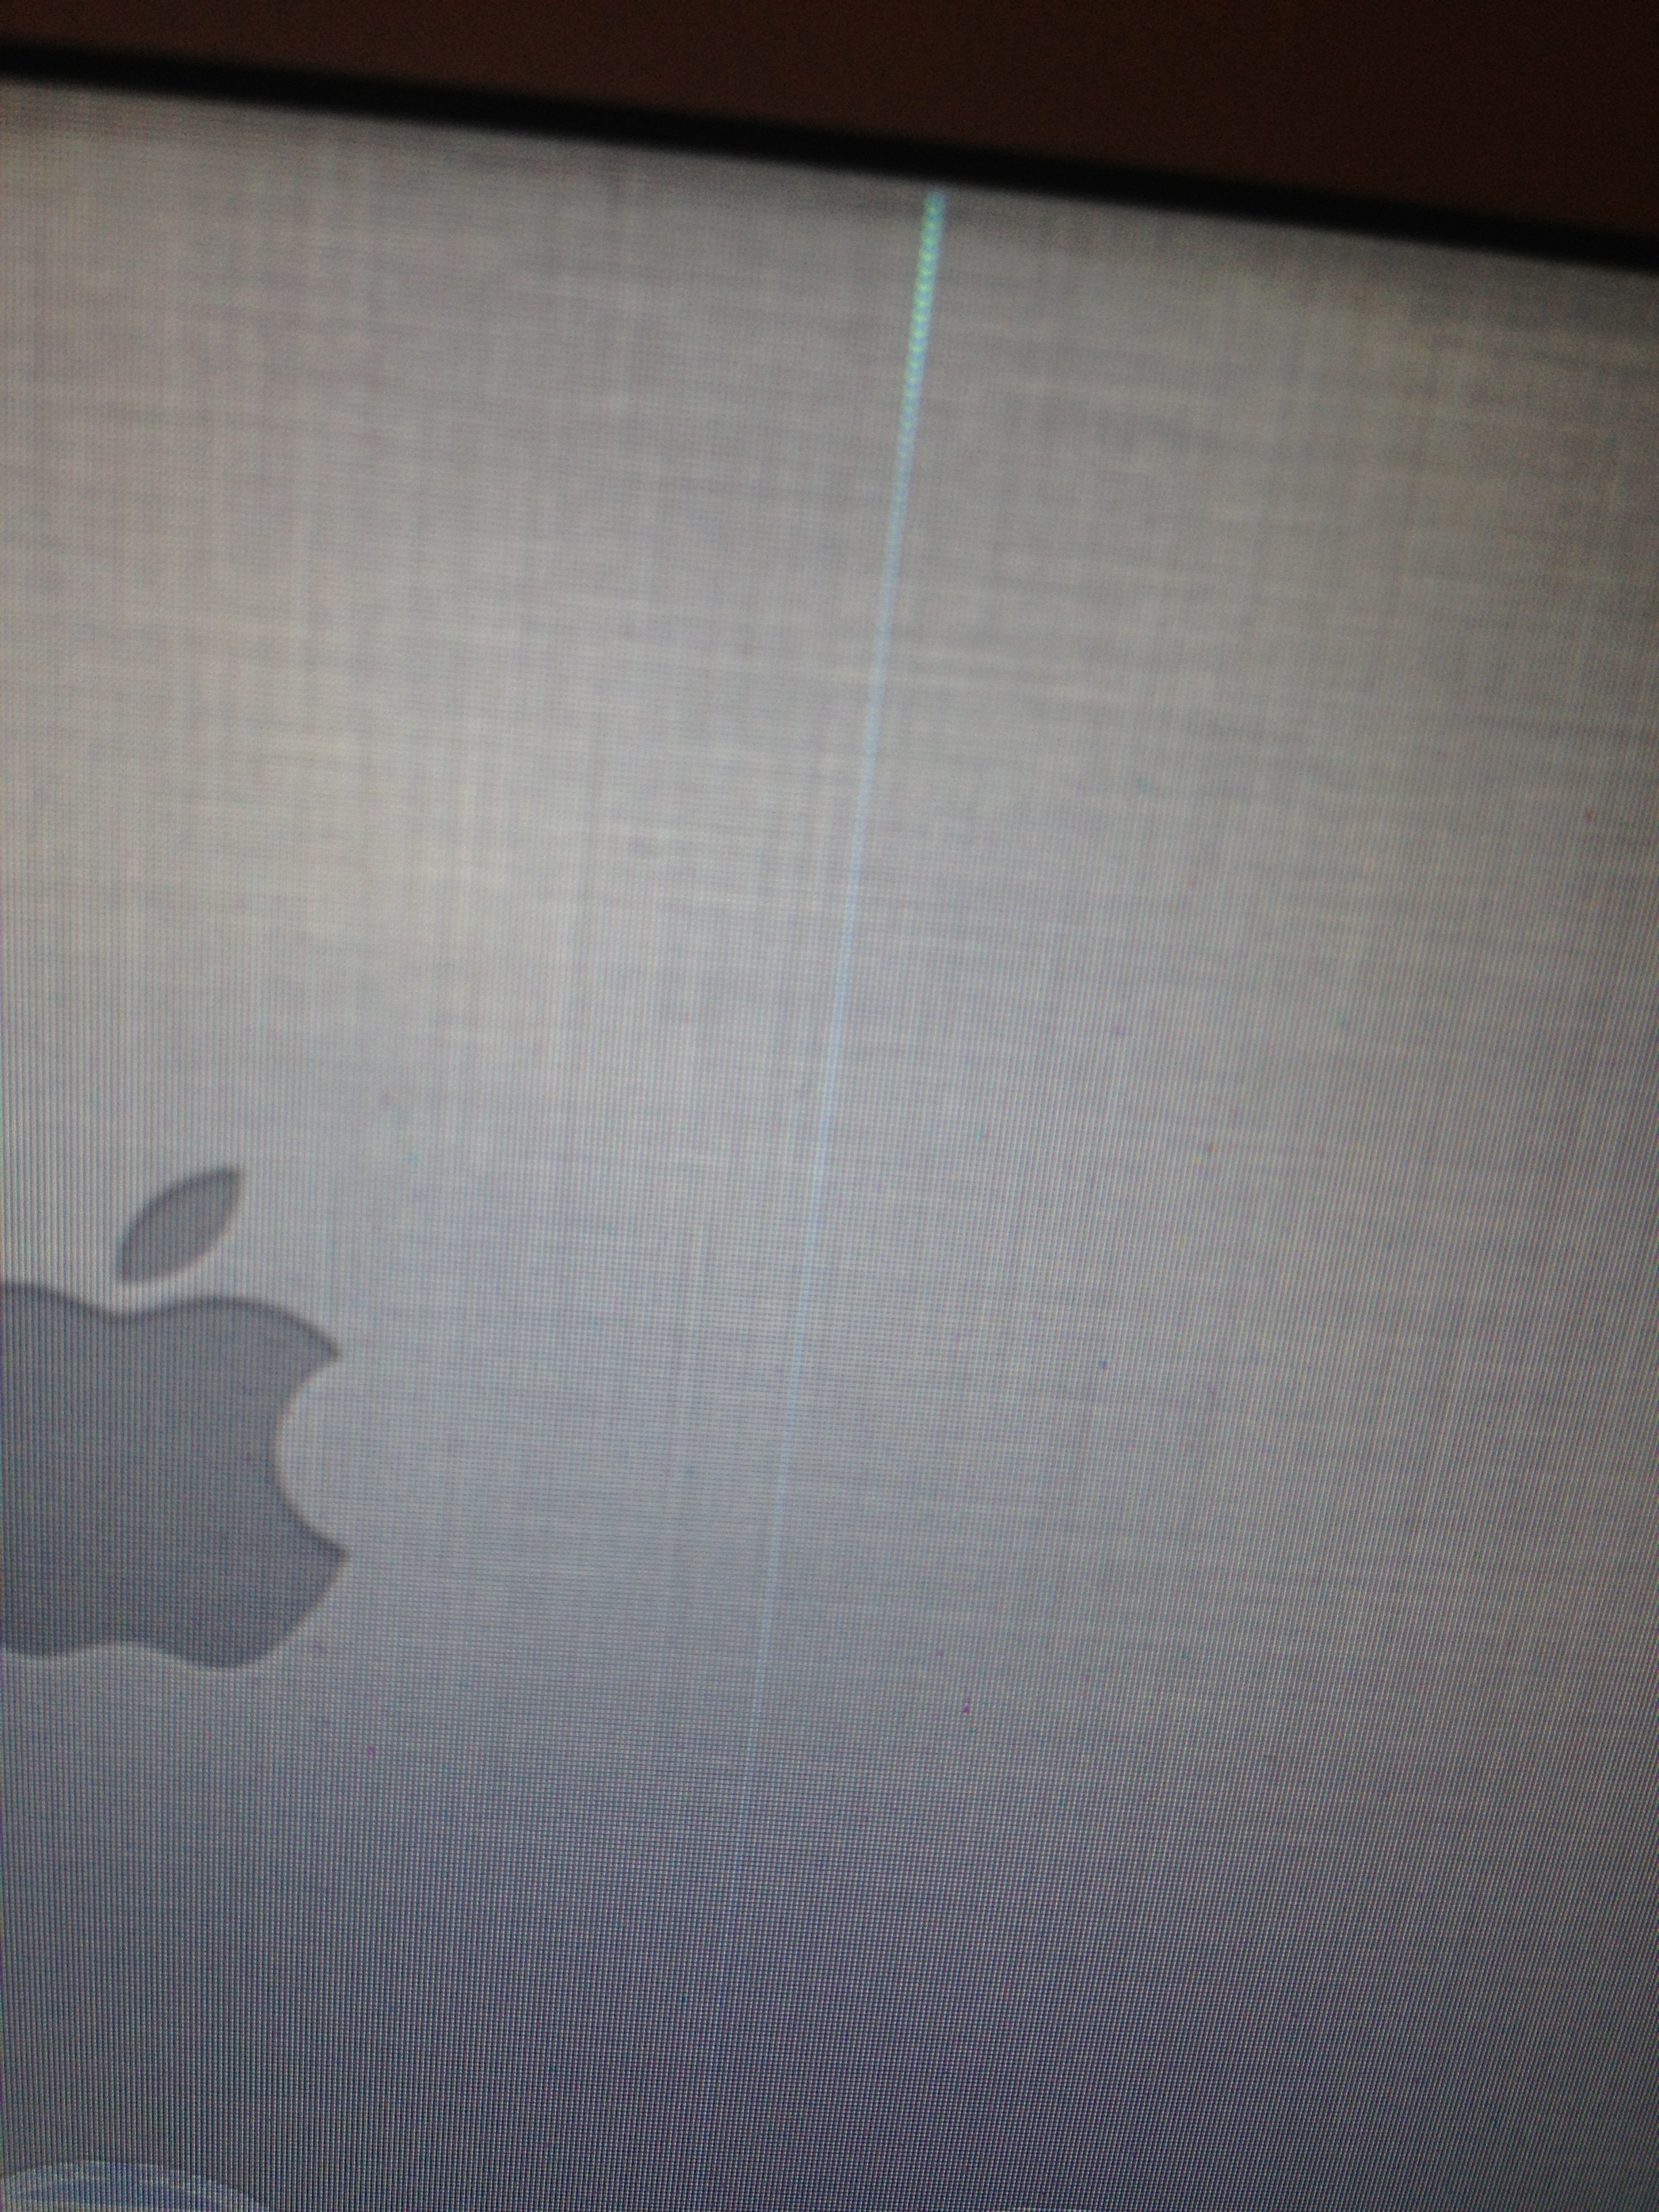  apple macbookair ekraninda cizgi